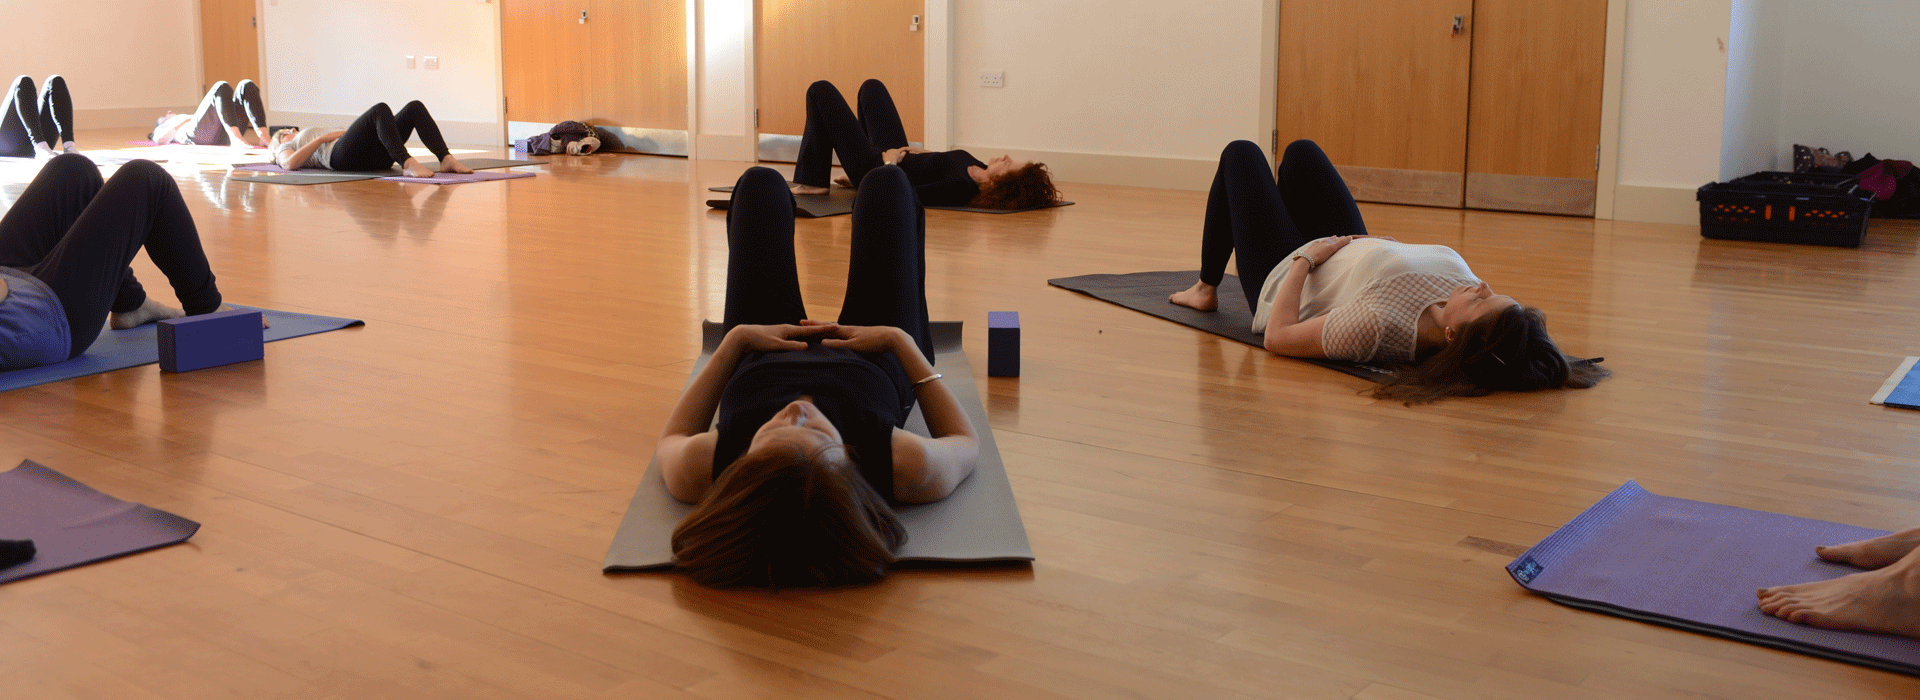 Yoga in the Studio at Malvern Active